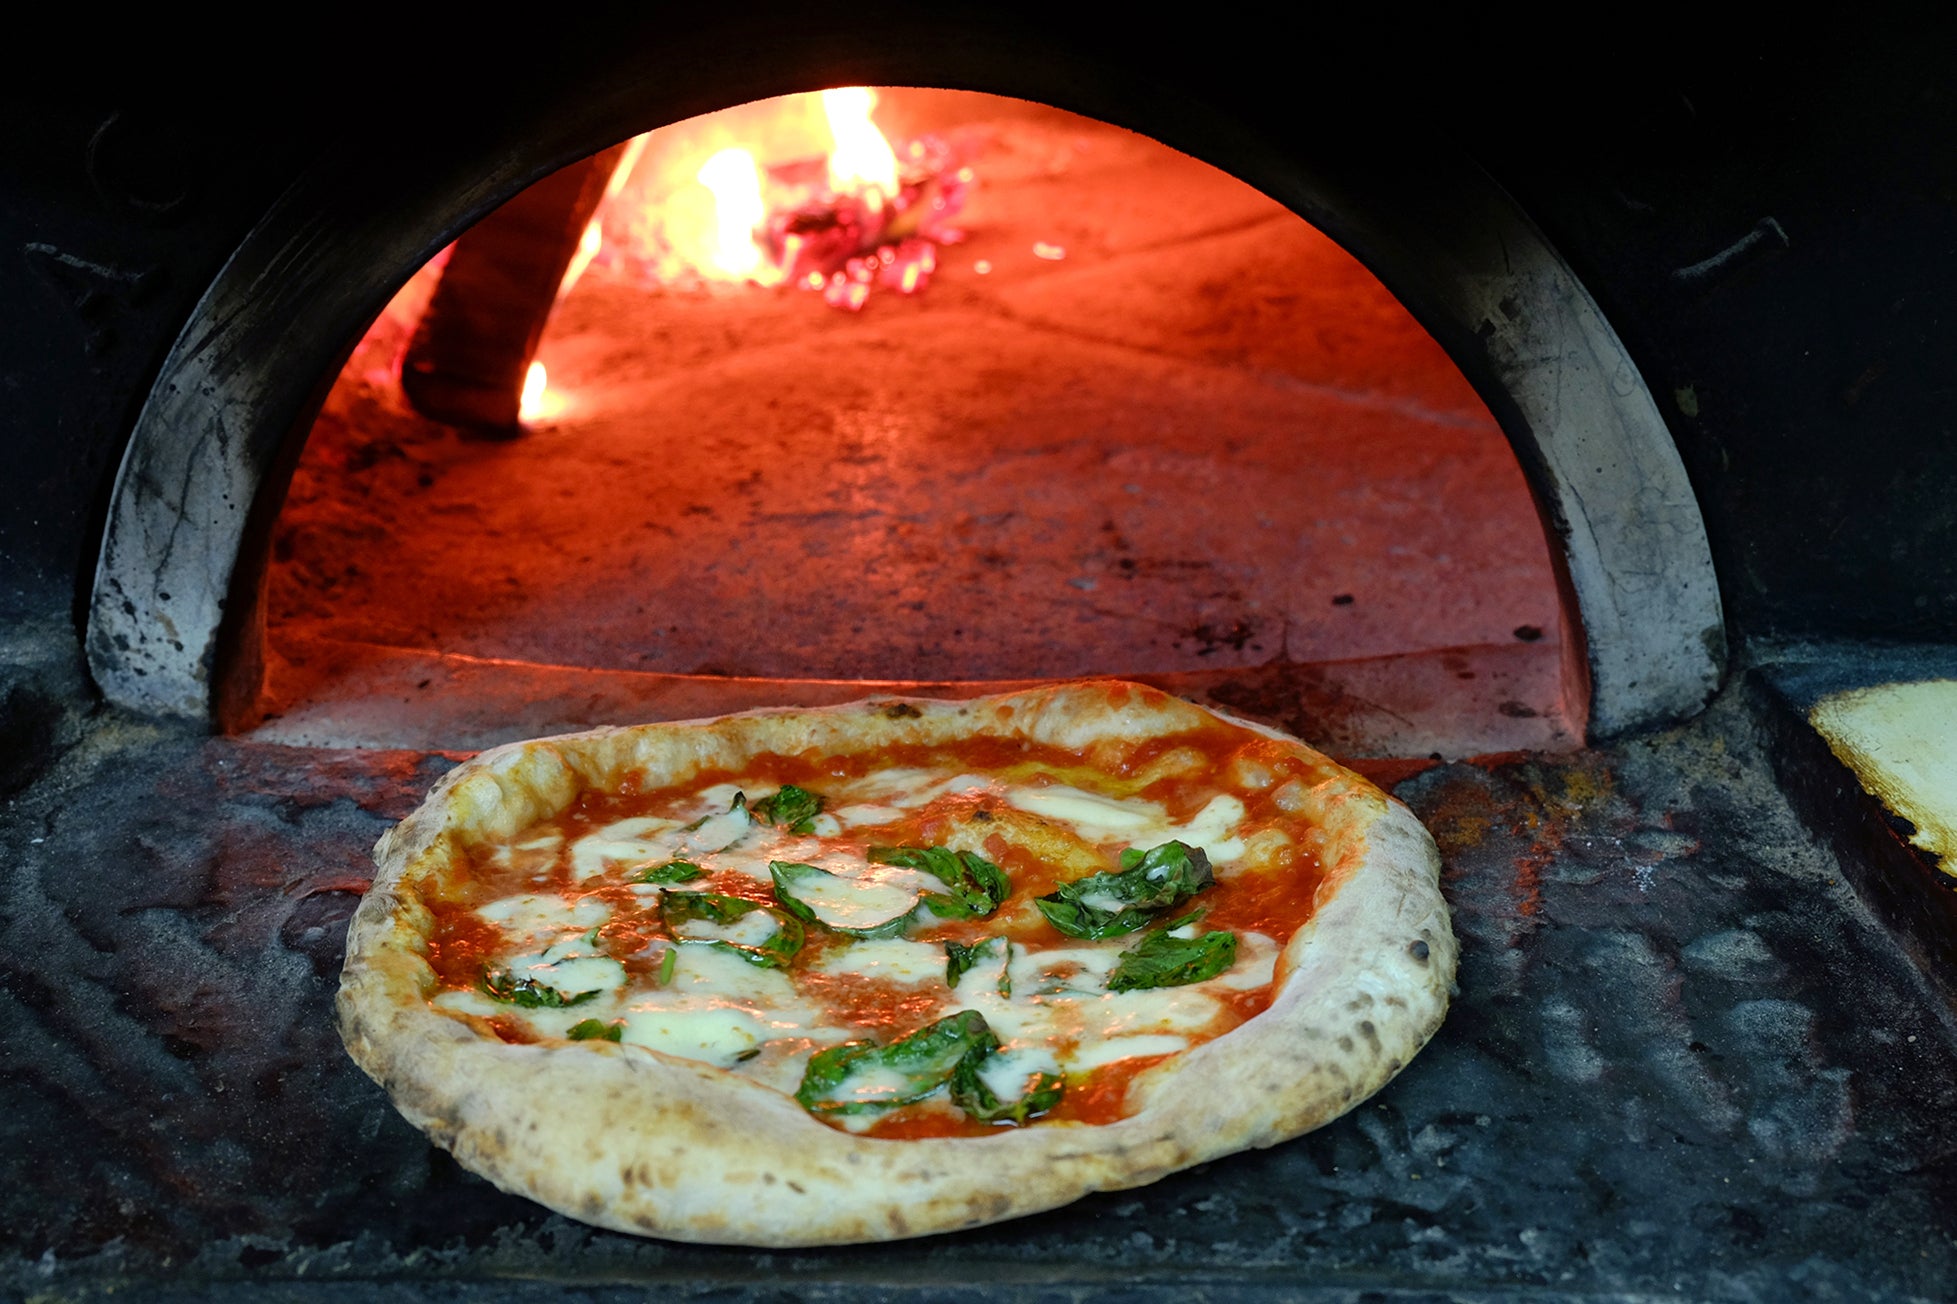 Pizza making is a woman’s work at Le Figlie di Iorio